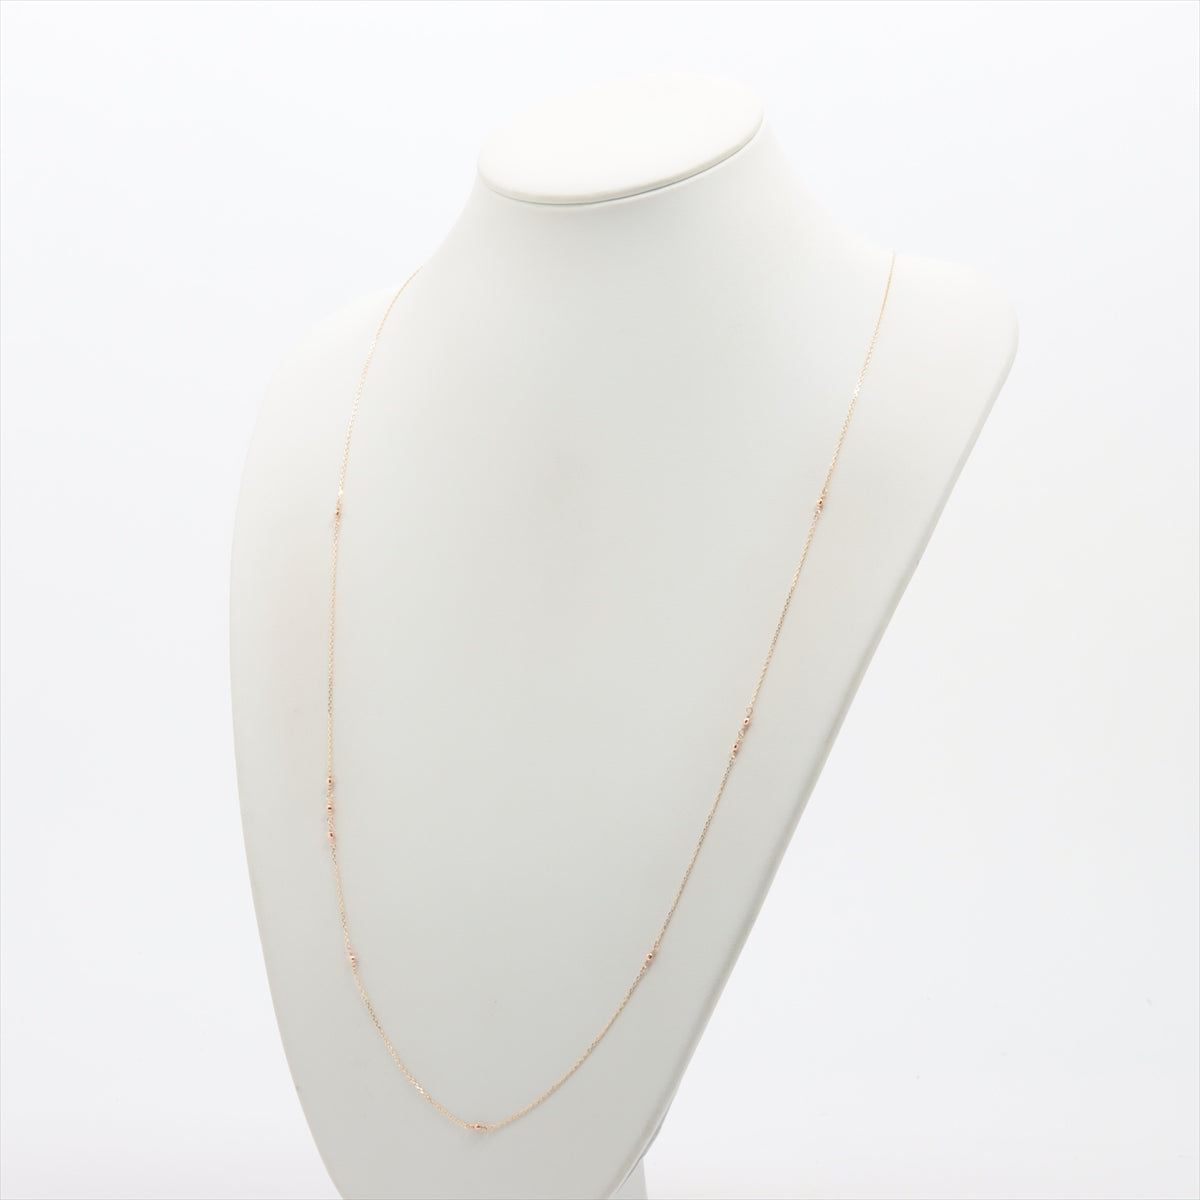 Agat necklace K10 (YGPG) 2.2g